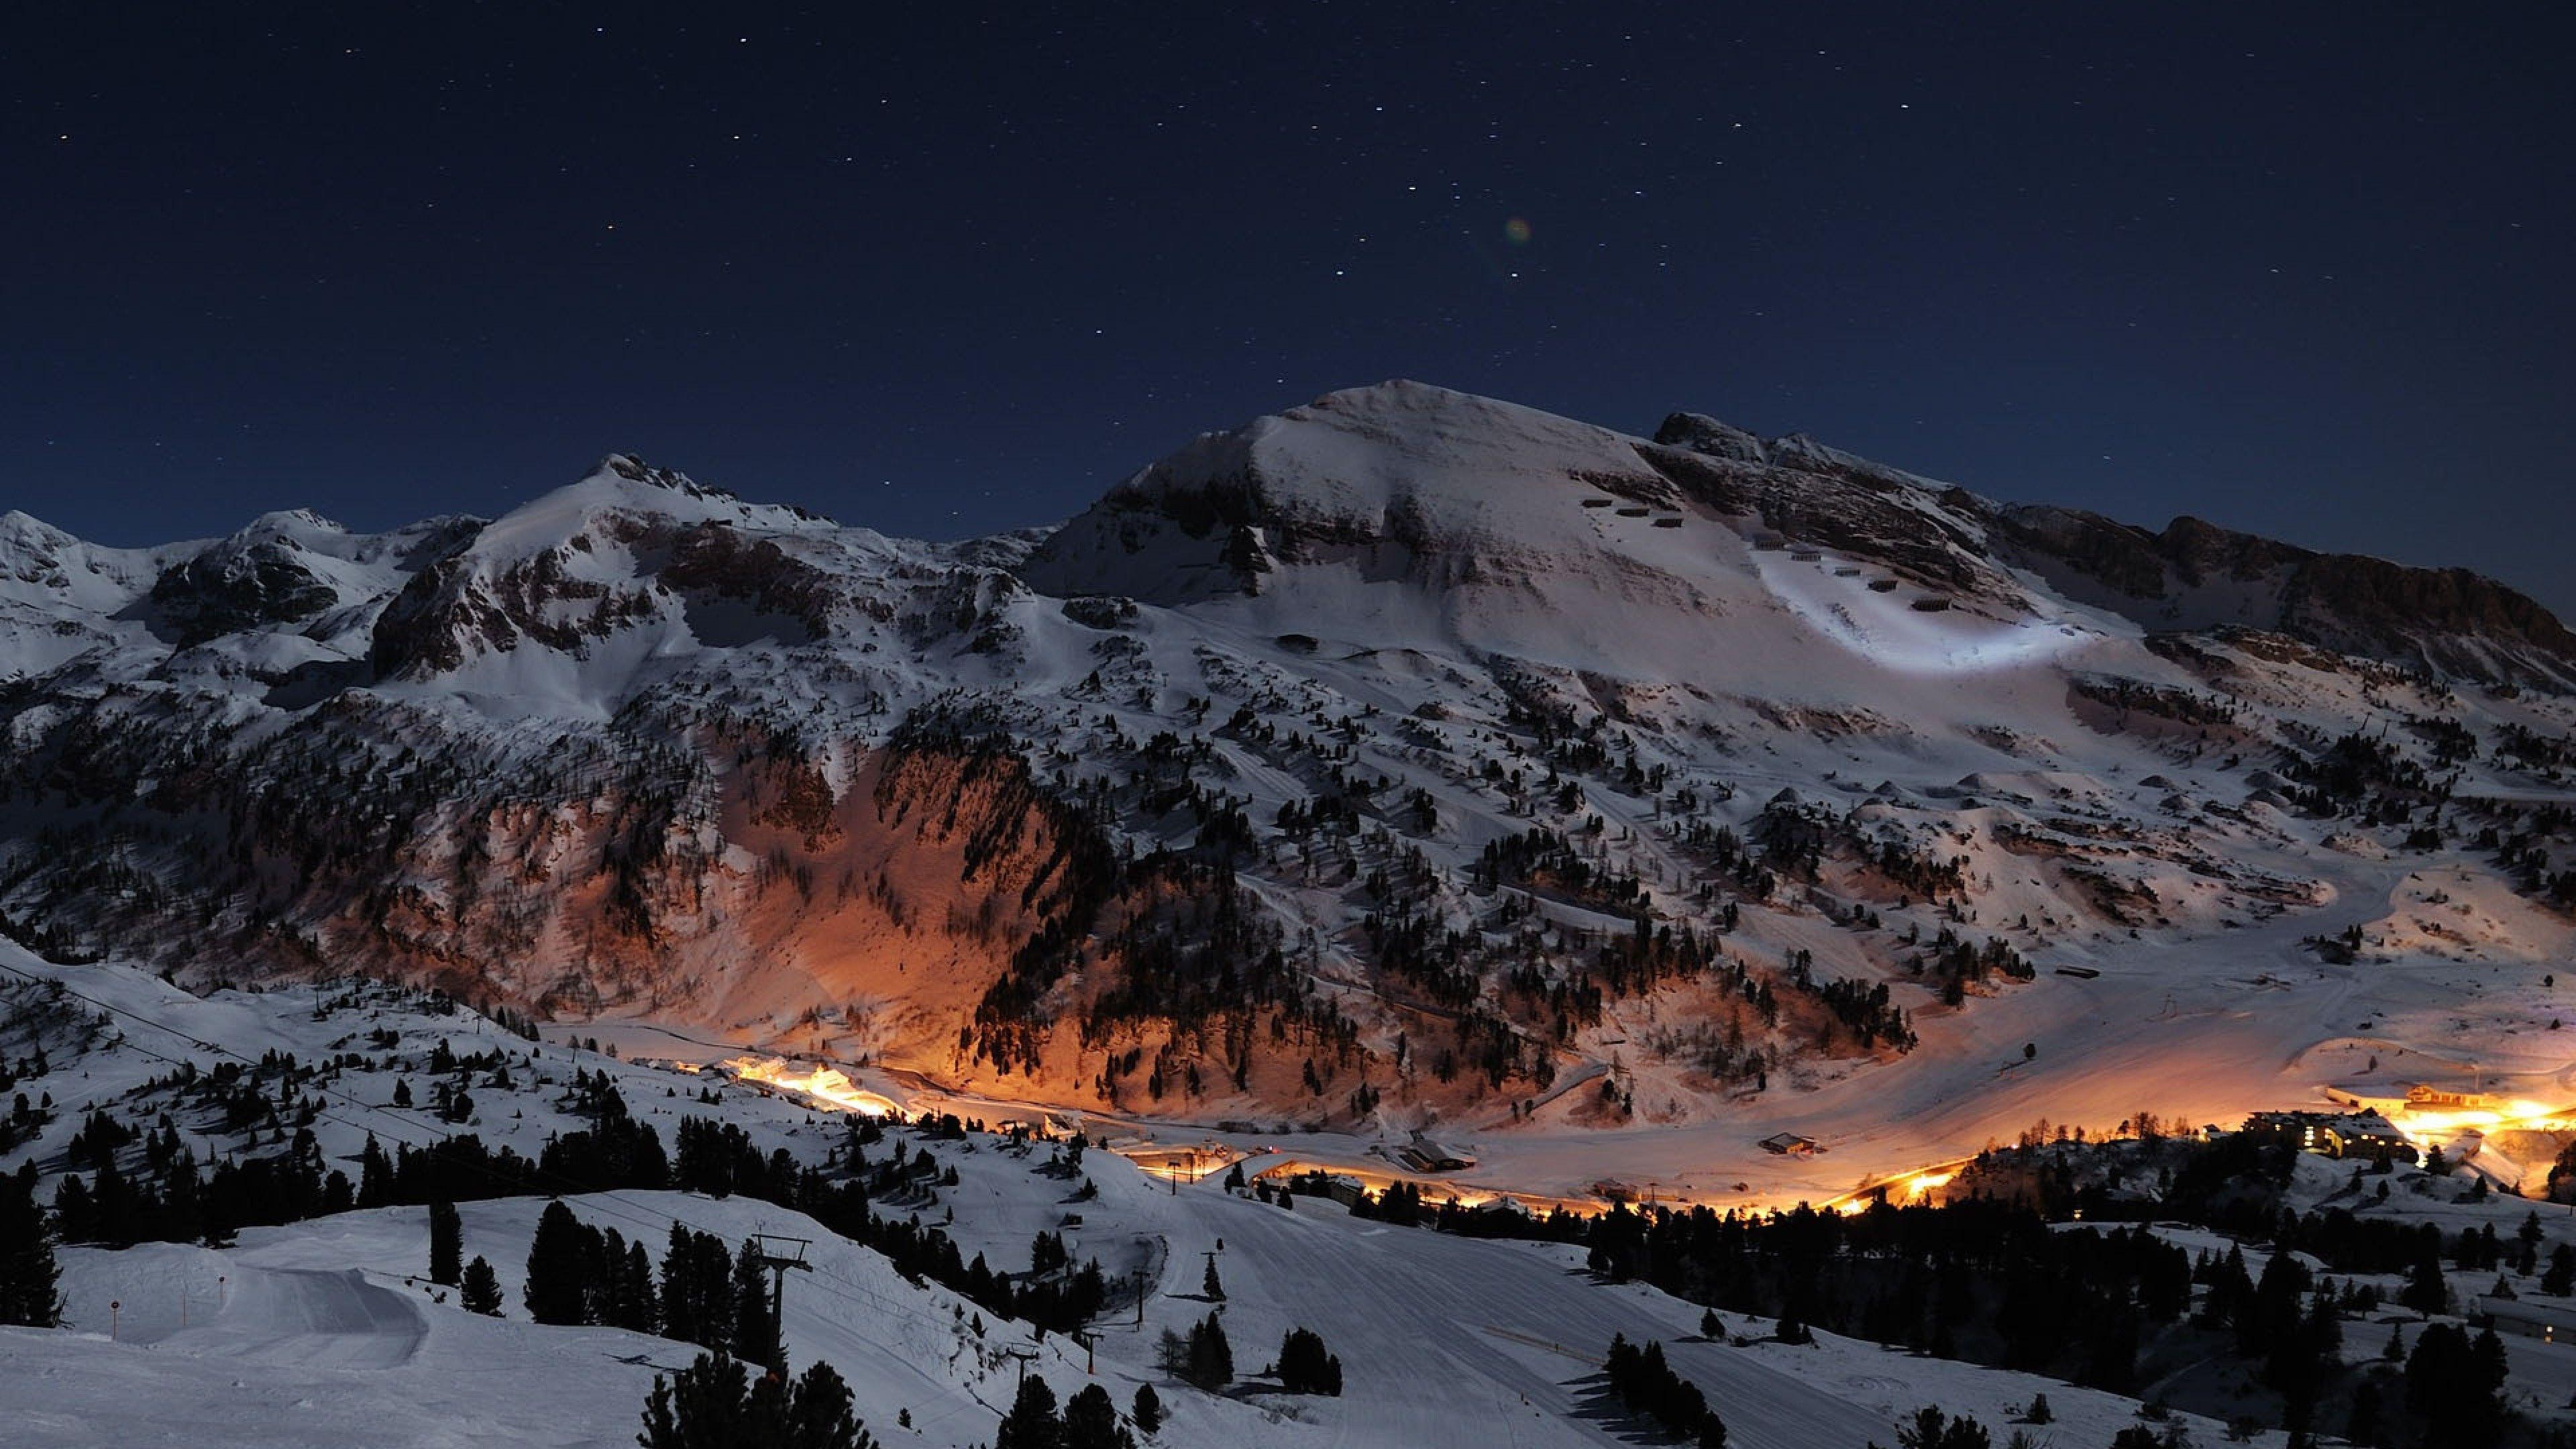 Night Star Alps. Mountain wallpaper, Mountain picture, Mountains